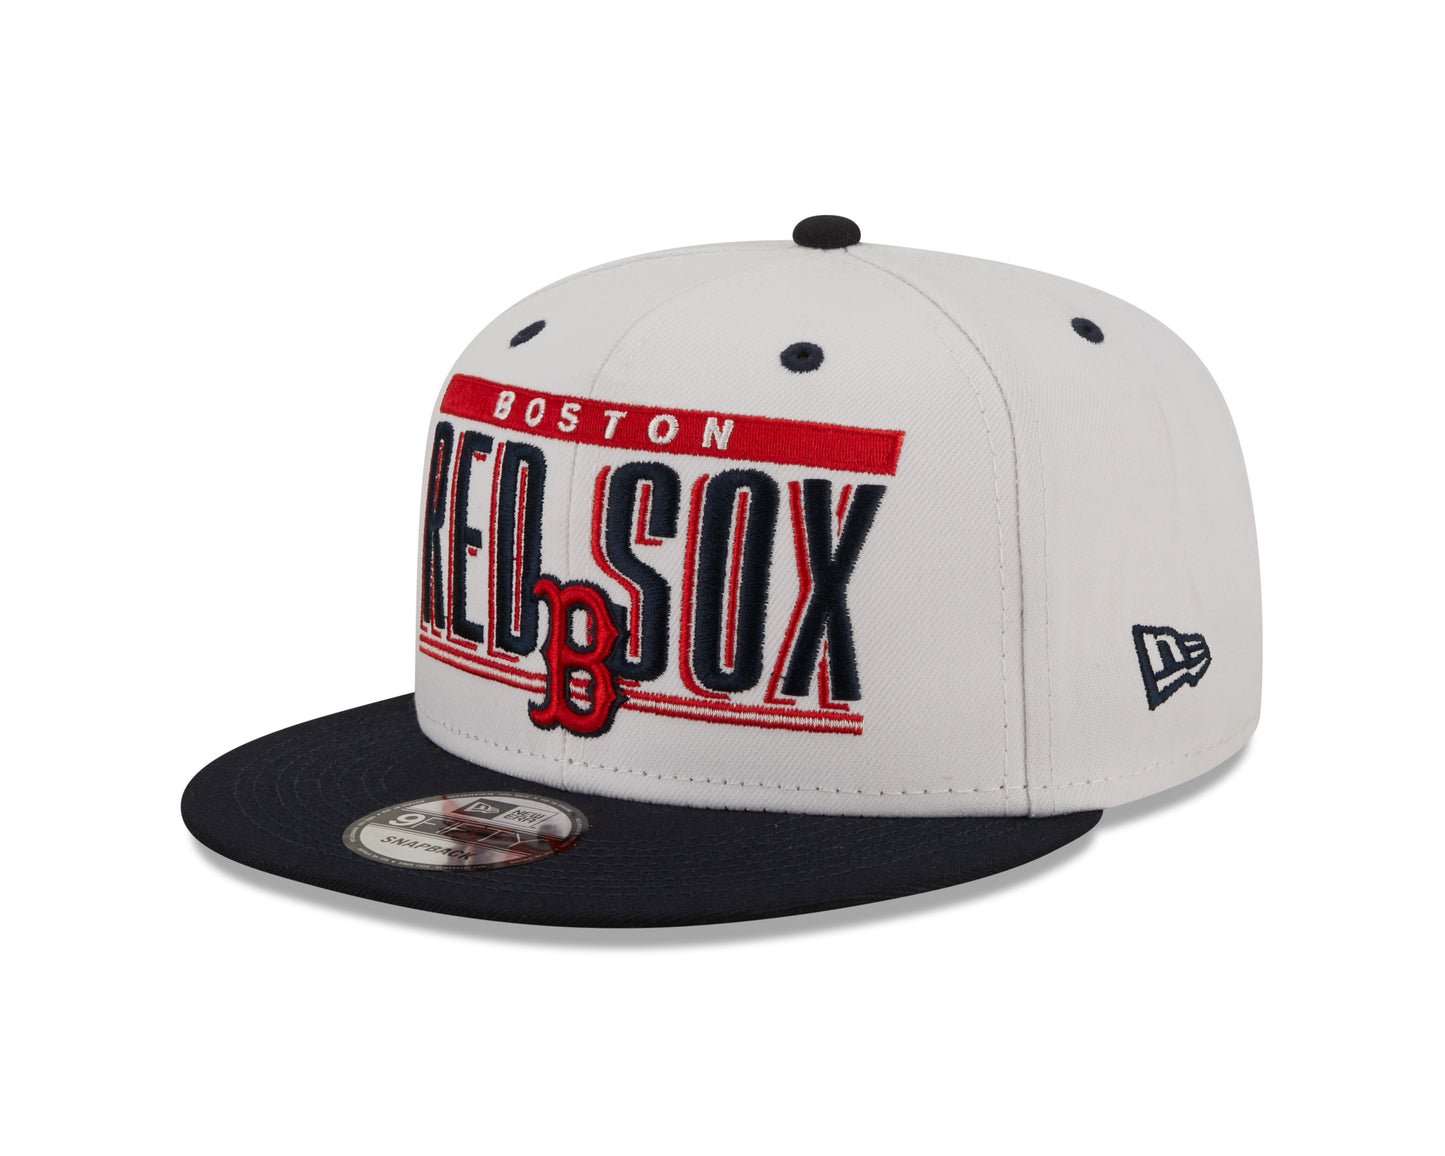 Boston Red Sox New Era Retro Title 9FIFTY Snapback Hat - White/Navy